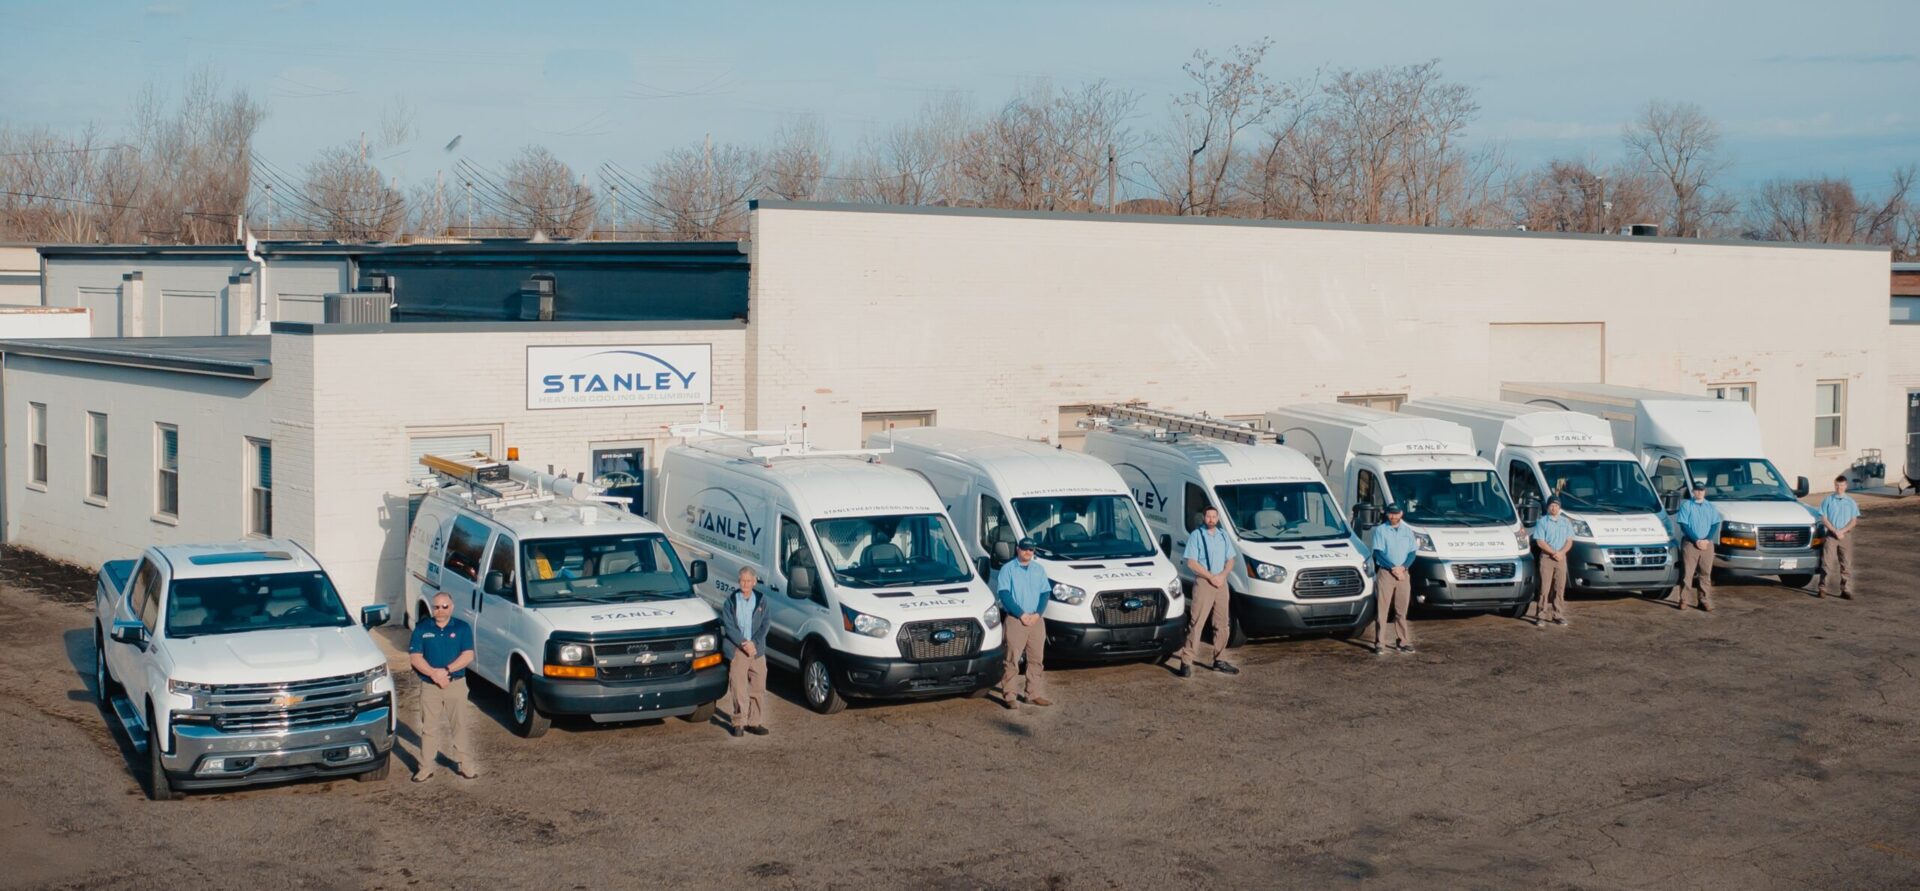 Stanley Heating Cooling & Plumbing team with service vans